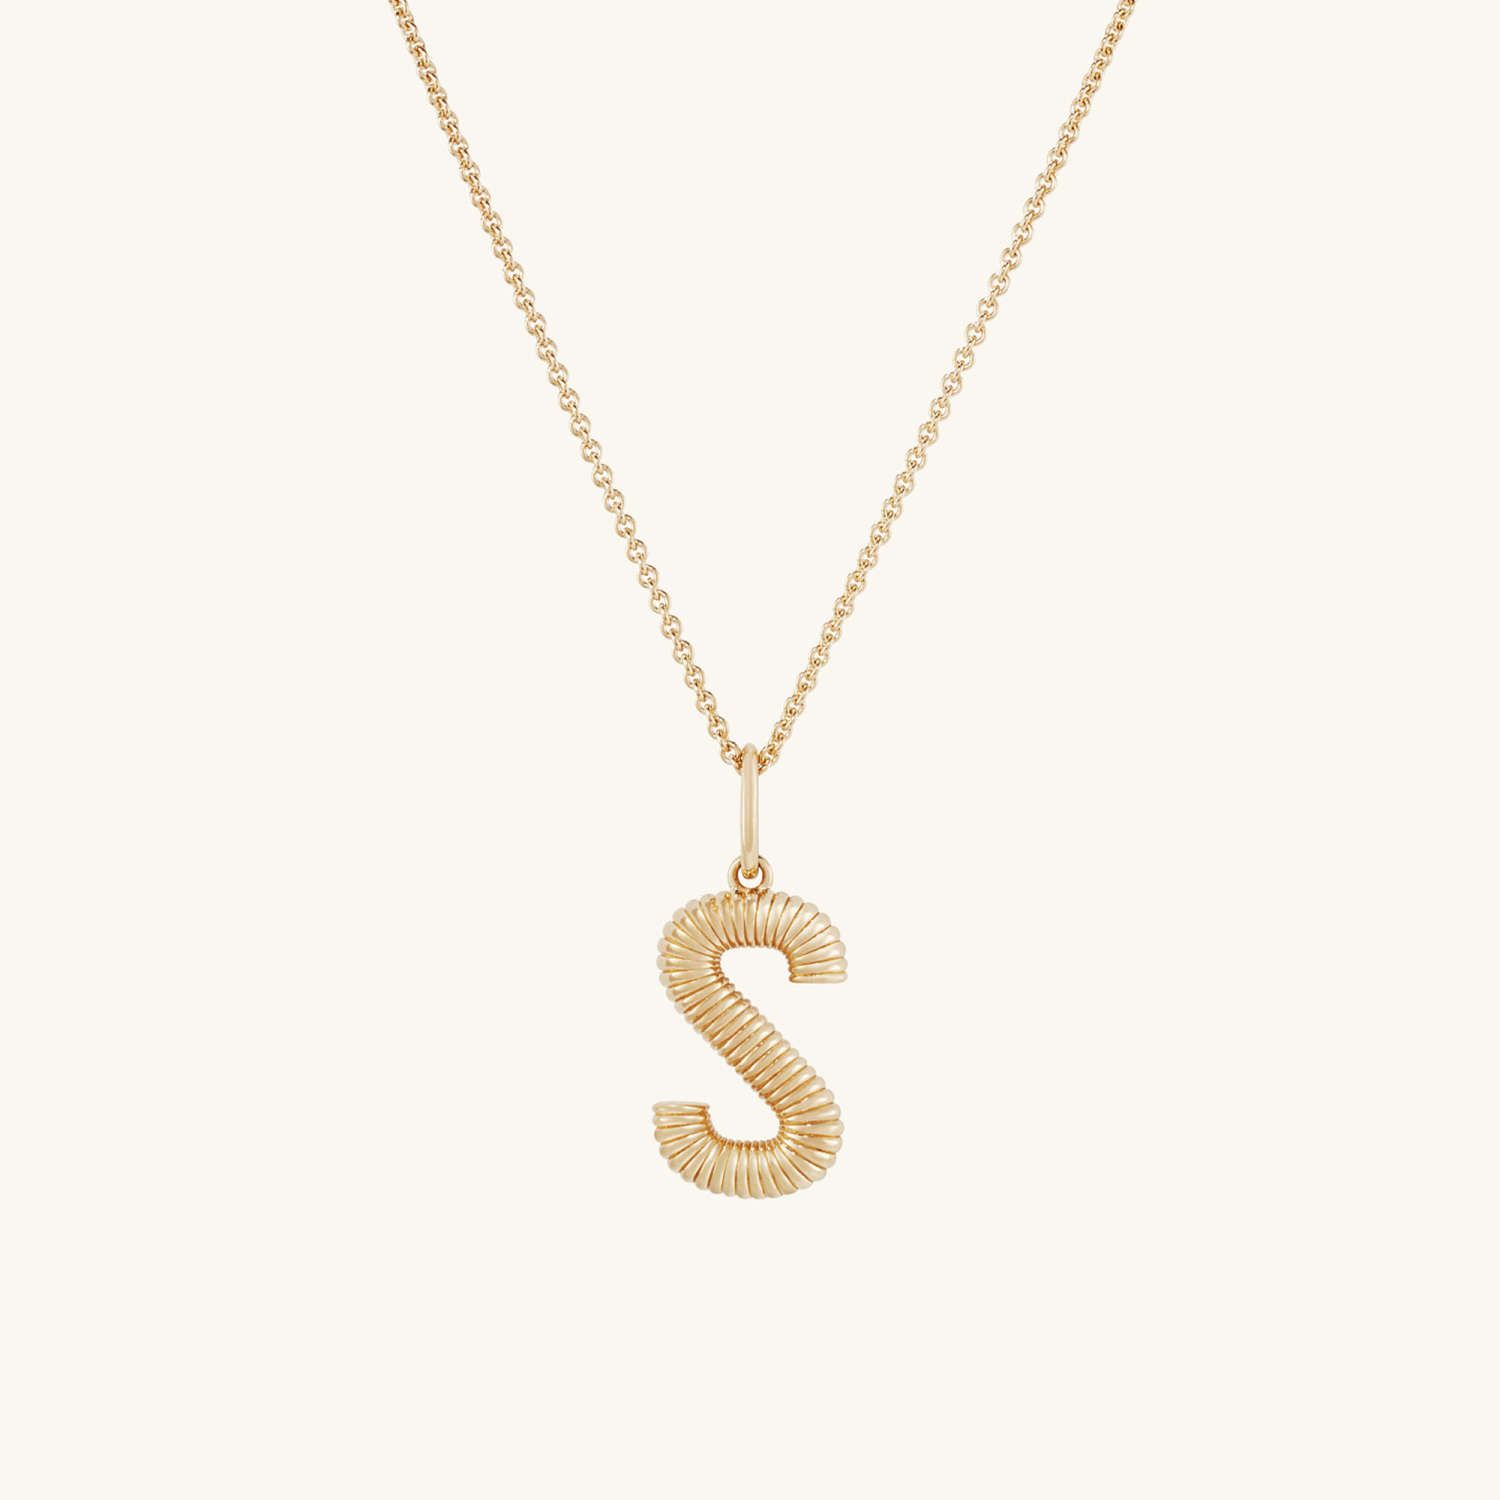 Bold Letter Pendant Necklace - $148 | Mejuri (Global)